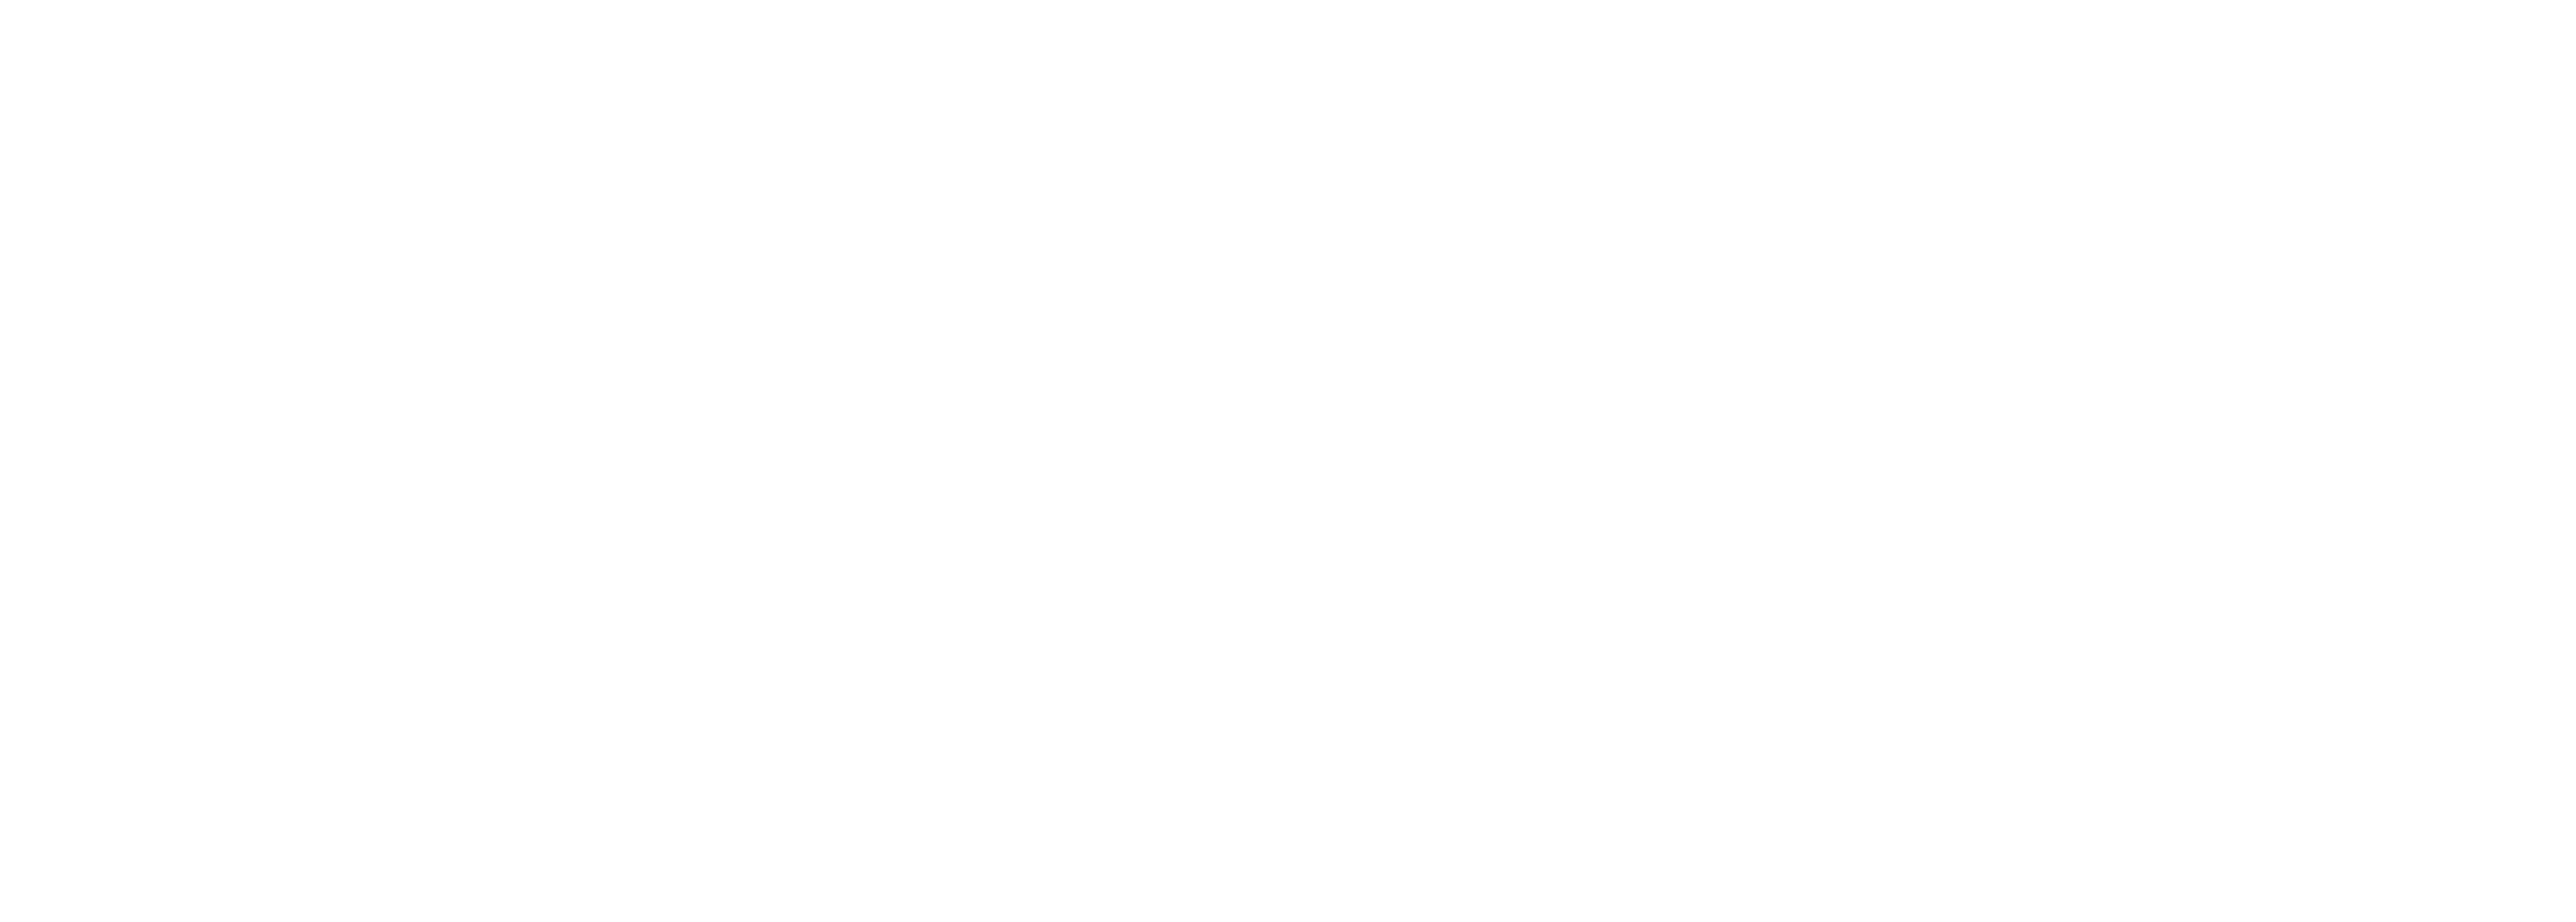 AllAboutSpace_Logo Black copy